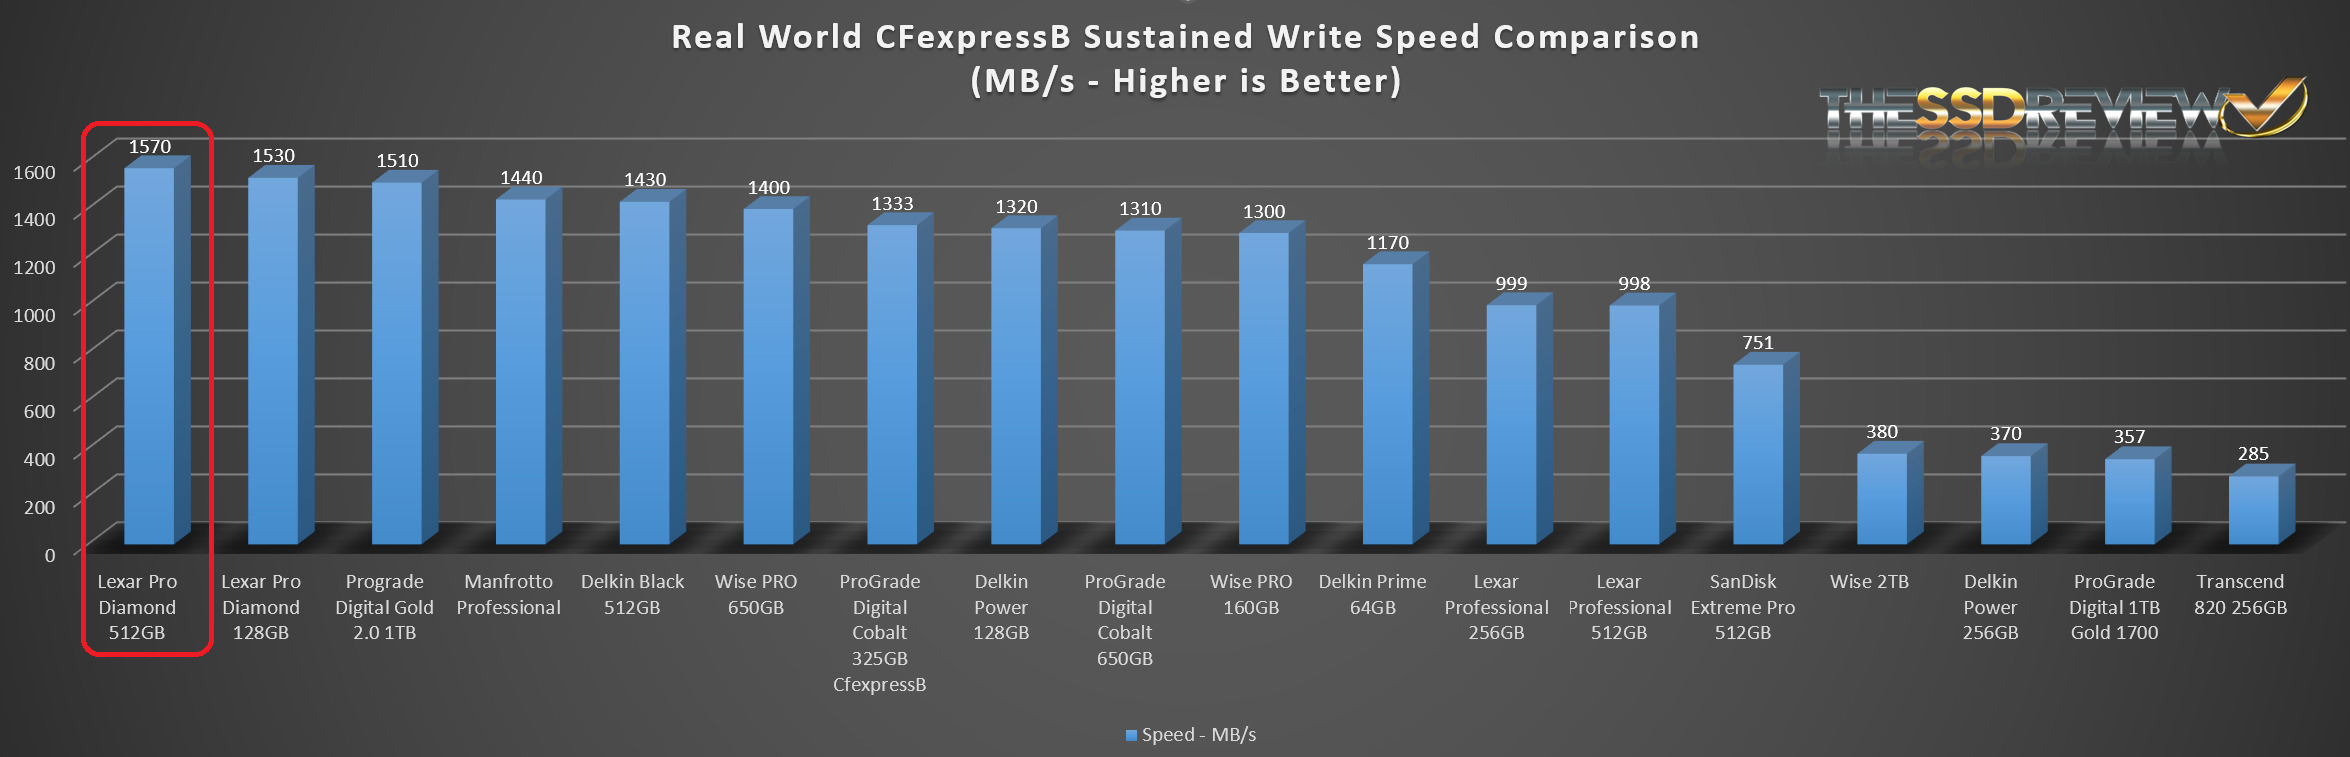 Lexar-Professional-Diamond-512GB-CFExpress-Card-Sustained-Write-Performance-Chart.jpg